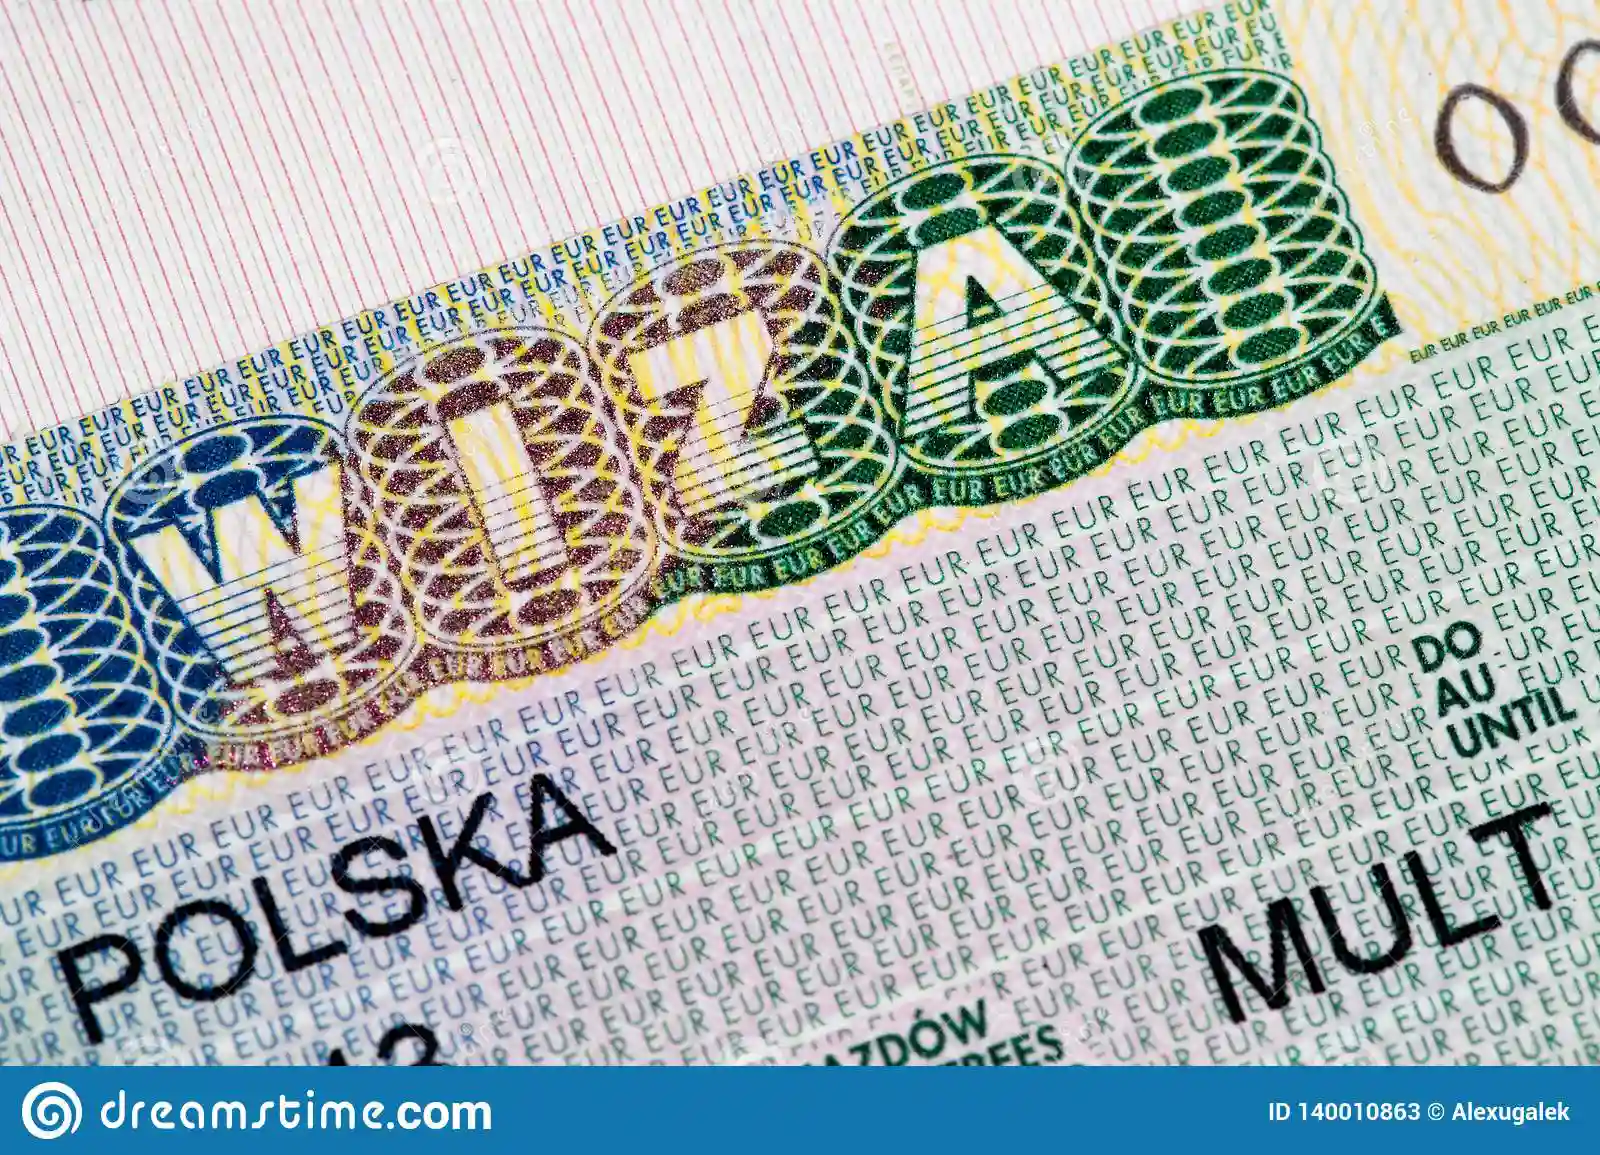 Couple Seeking Polish Visas Conned US$4 000